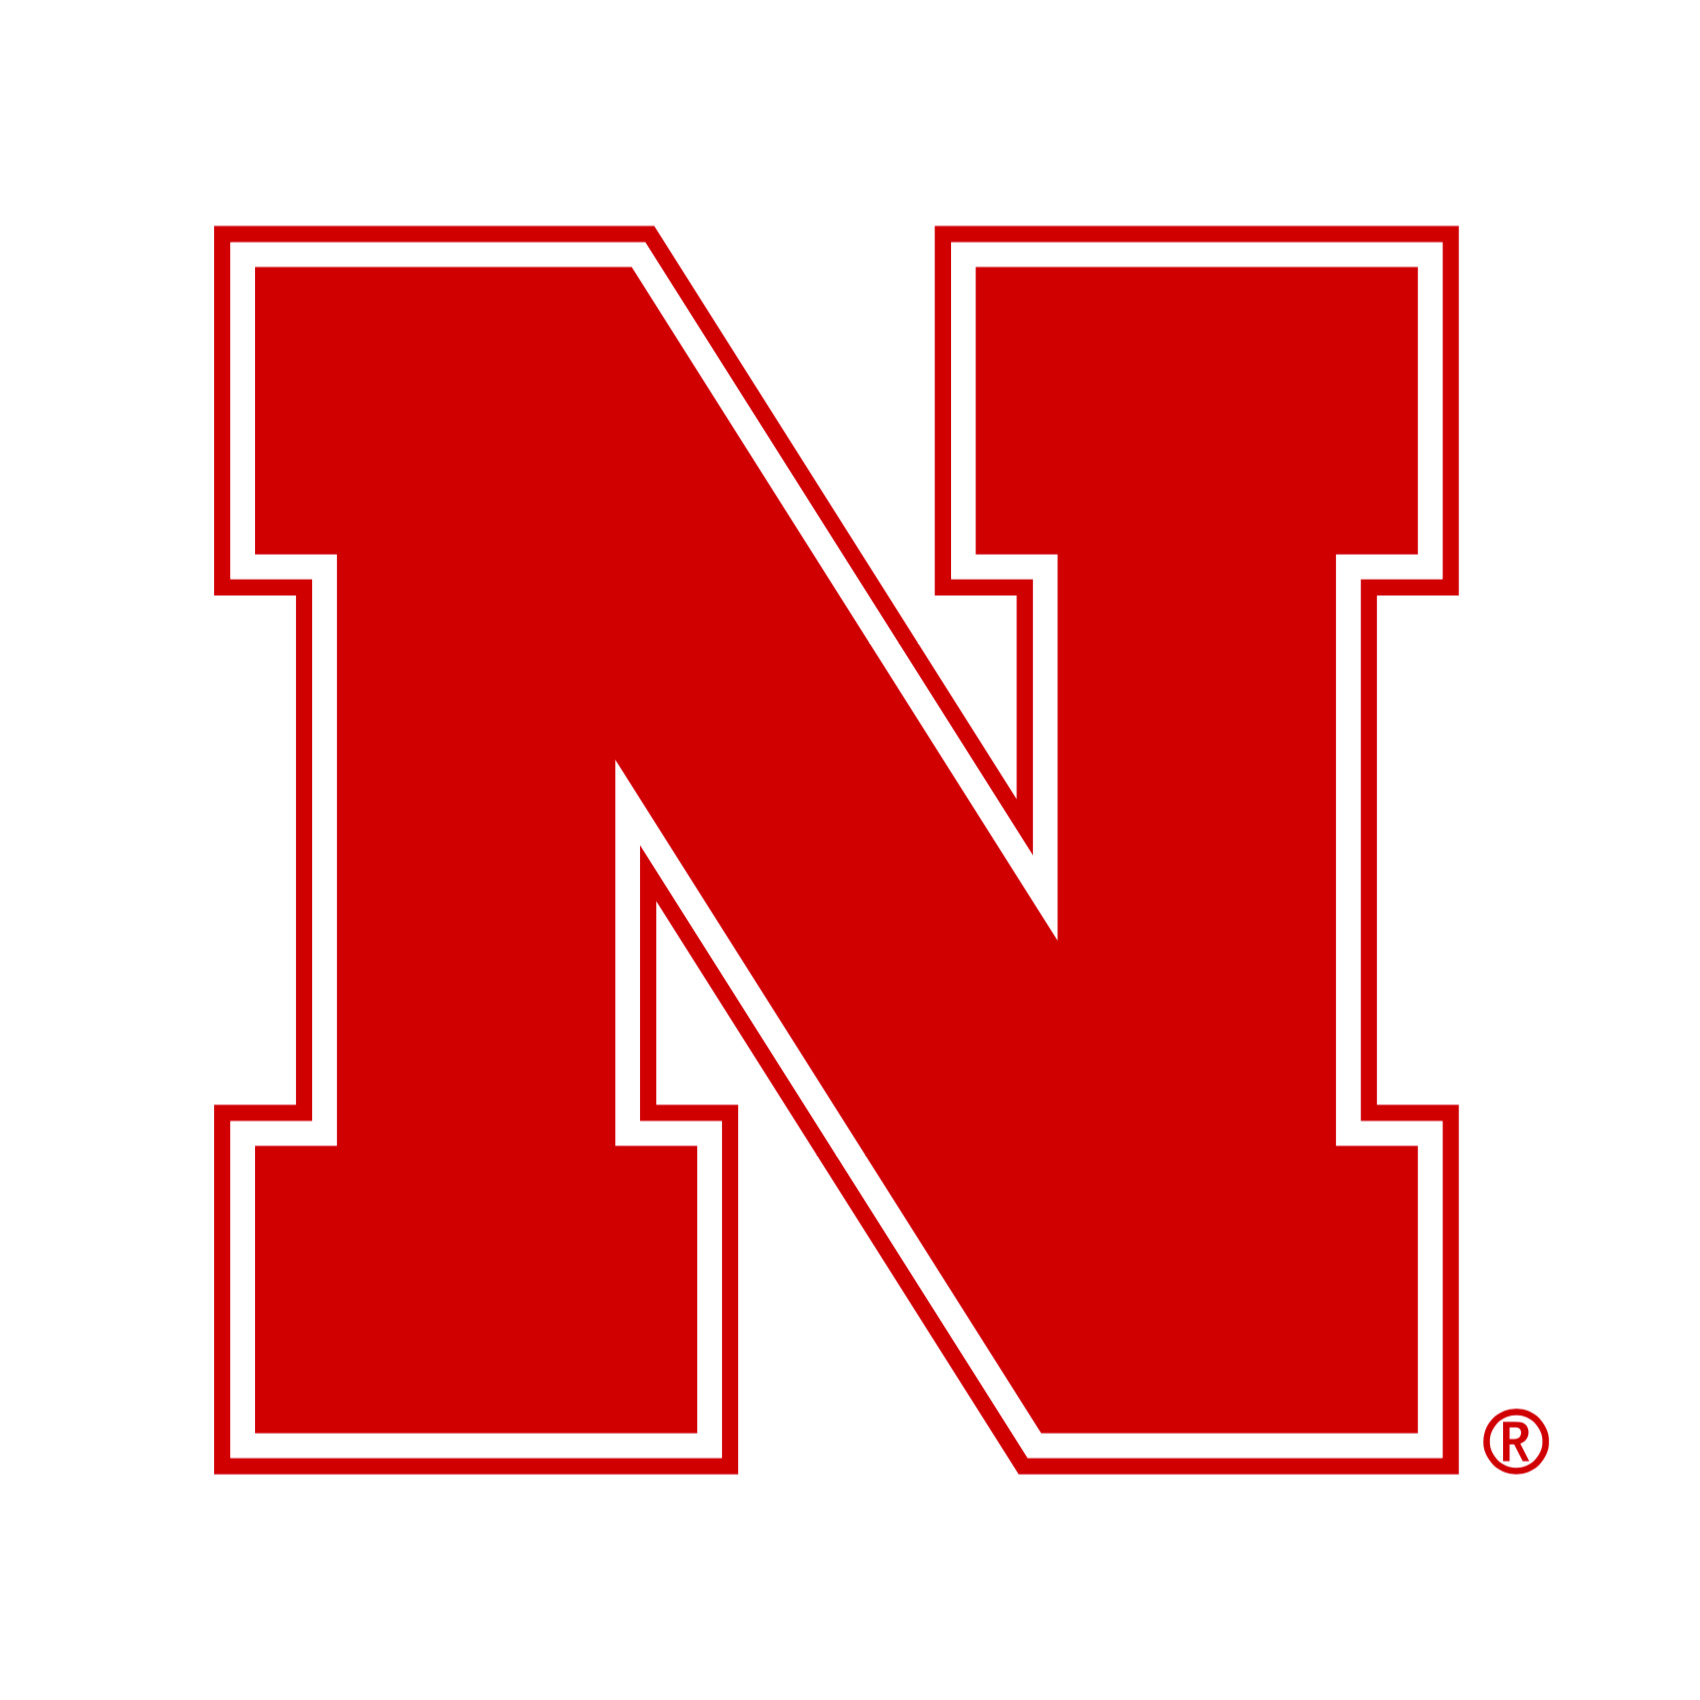 Nebraska N campus icon